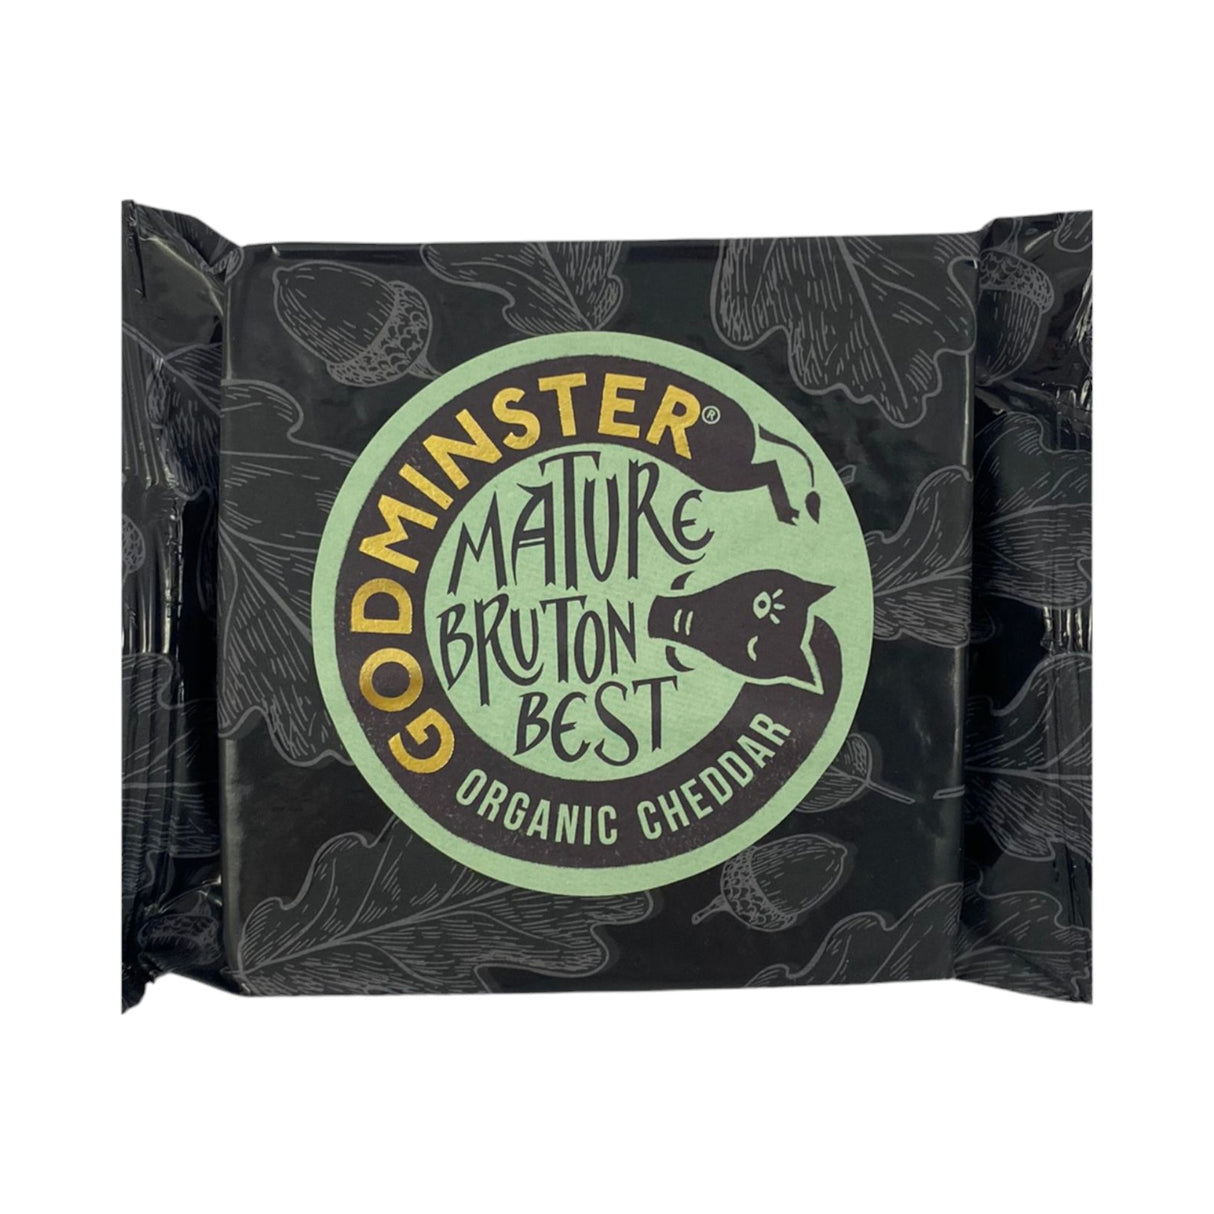 Godminster - Mature Organic Cheddar 200g